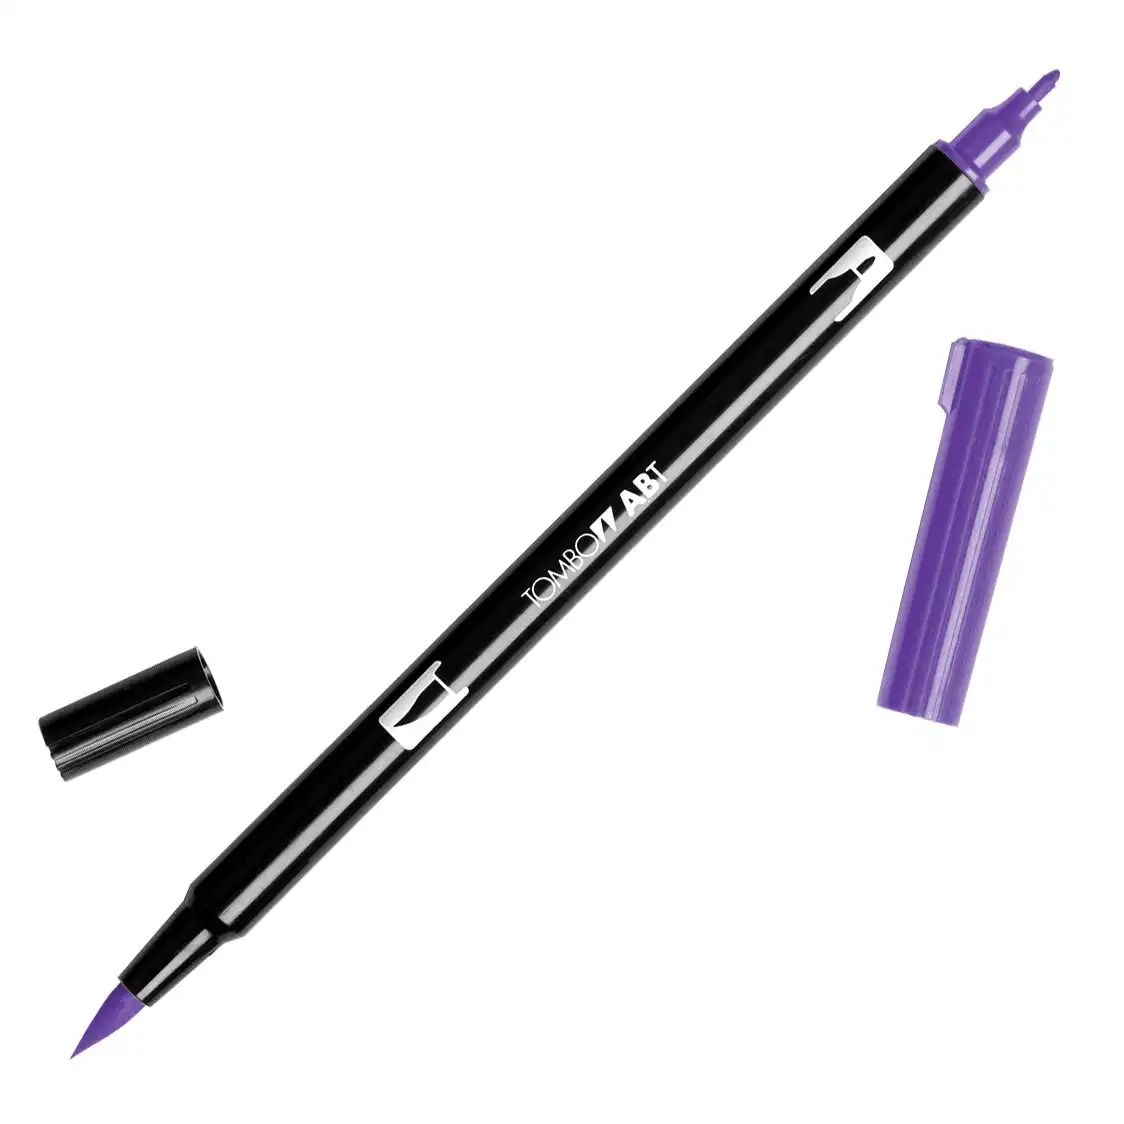 Tombow Dual Brush Pen, 636 Imperial Purple